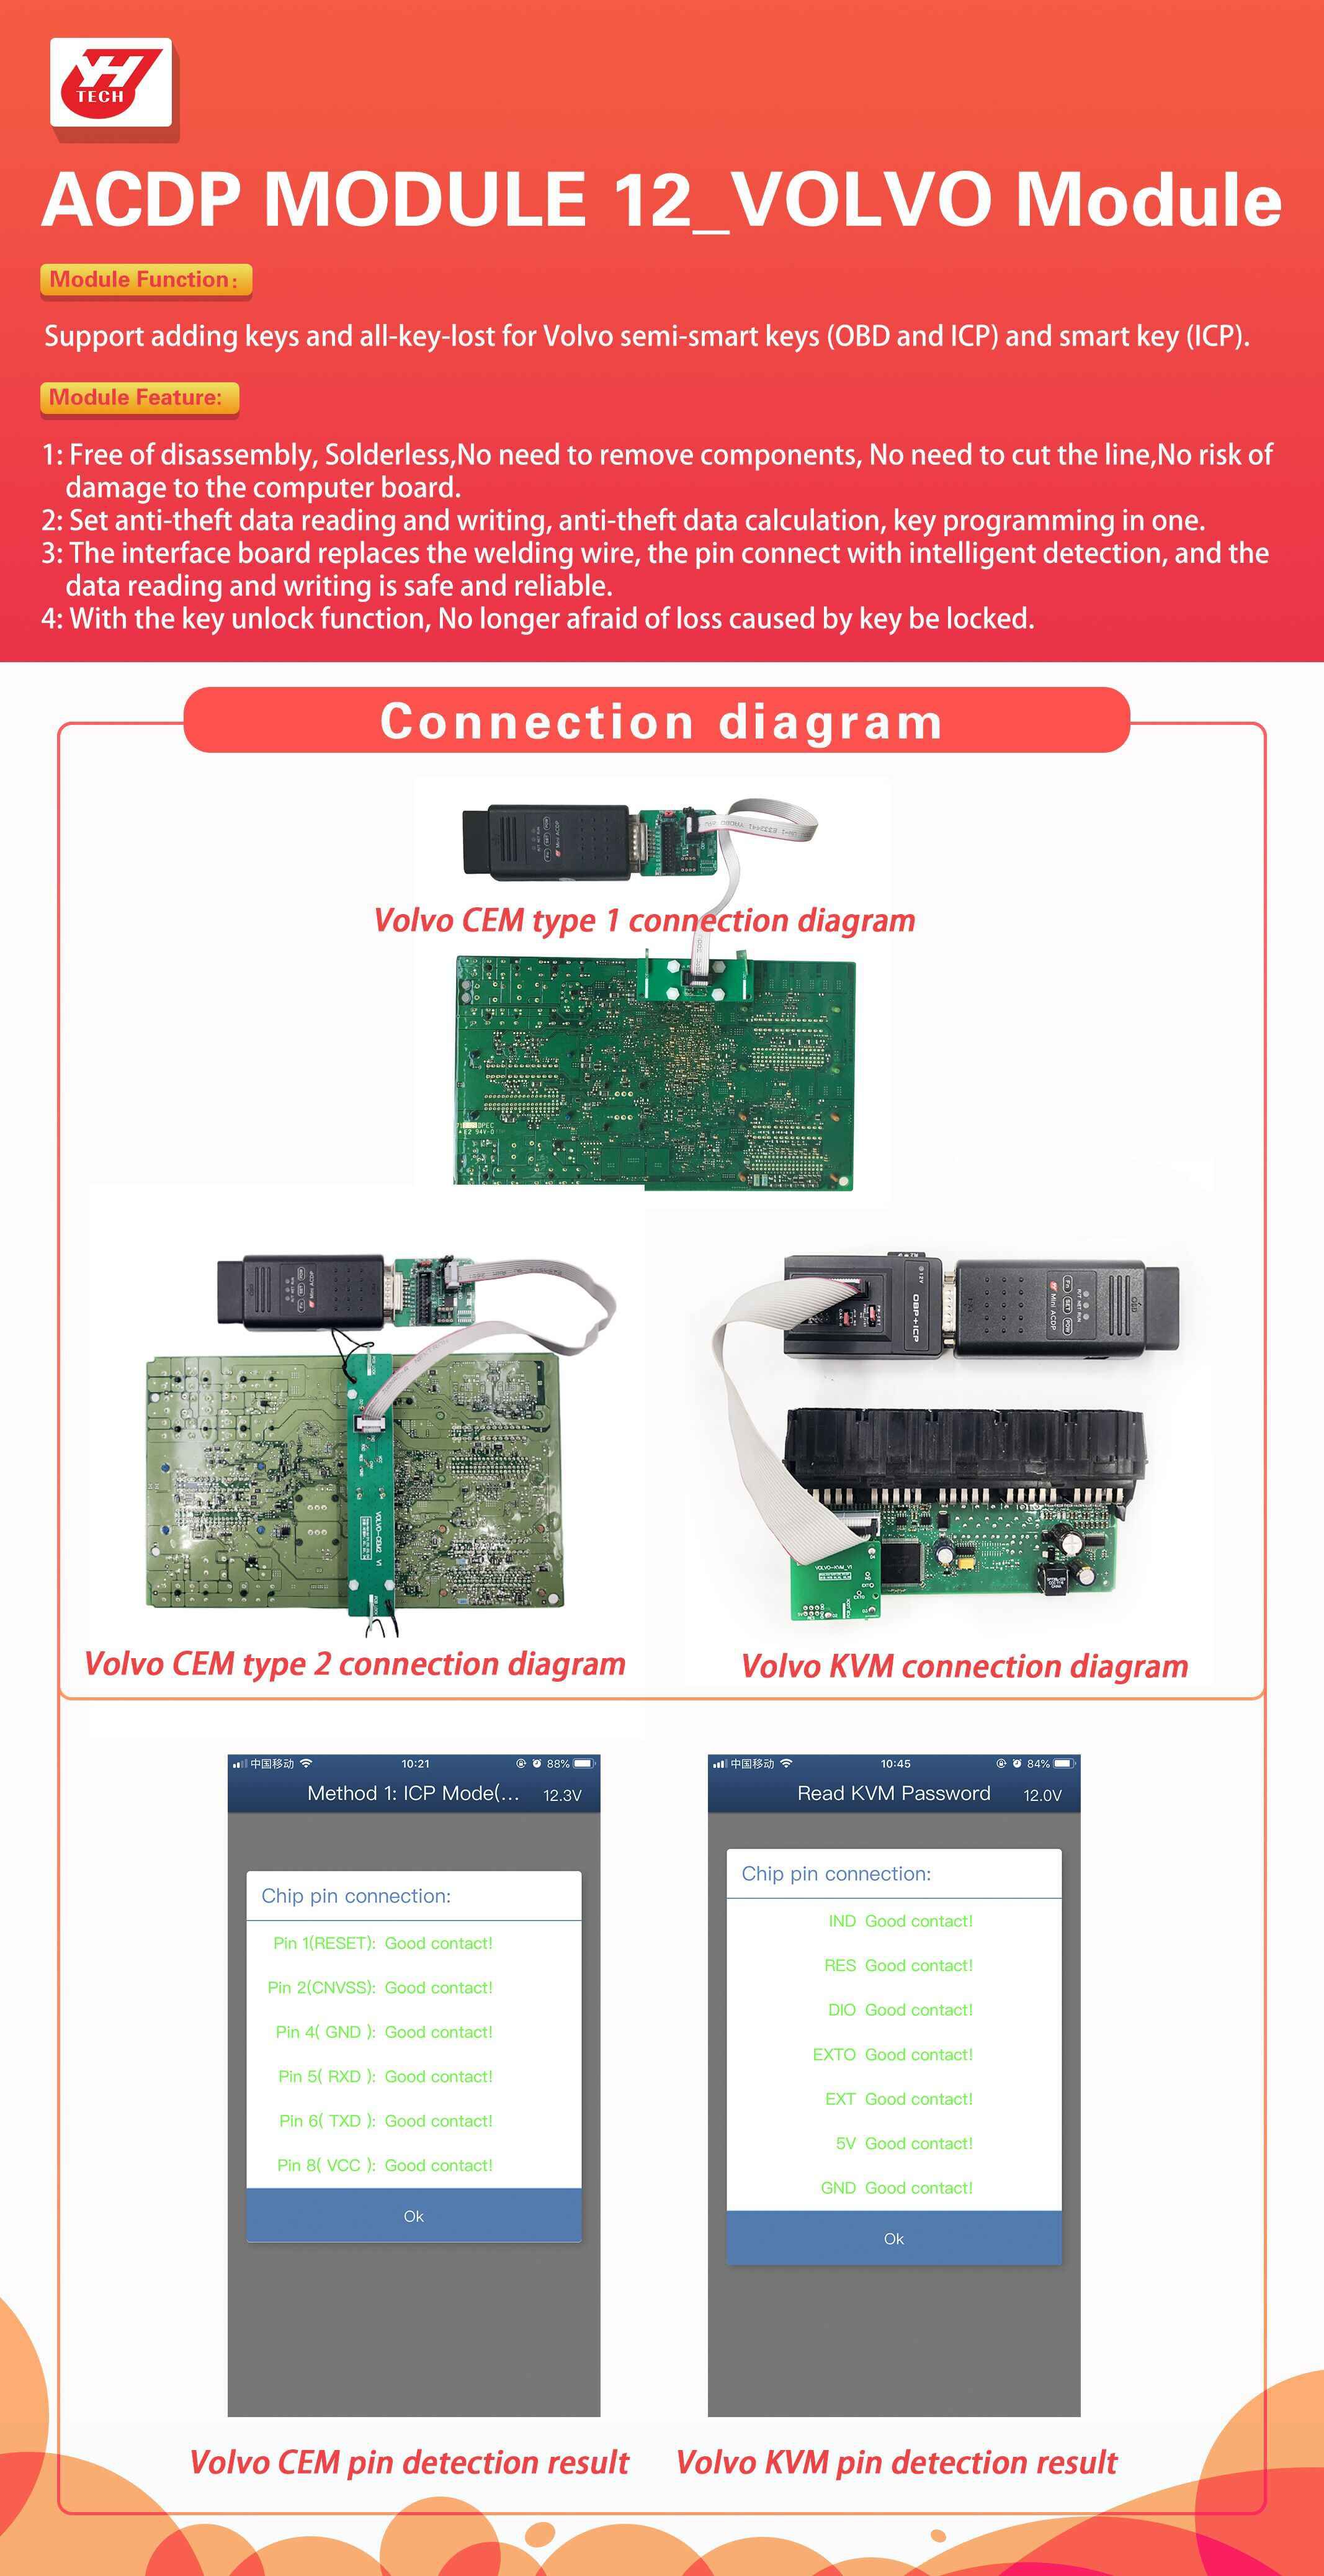 Yanhua Mini ACDP Volvo Module12 Latest Connection Diagram: